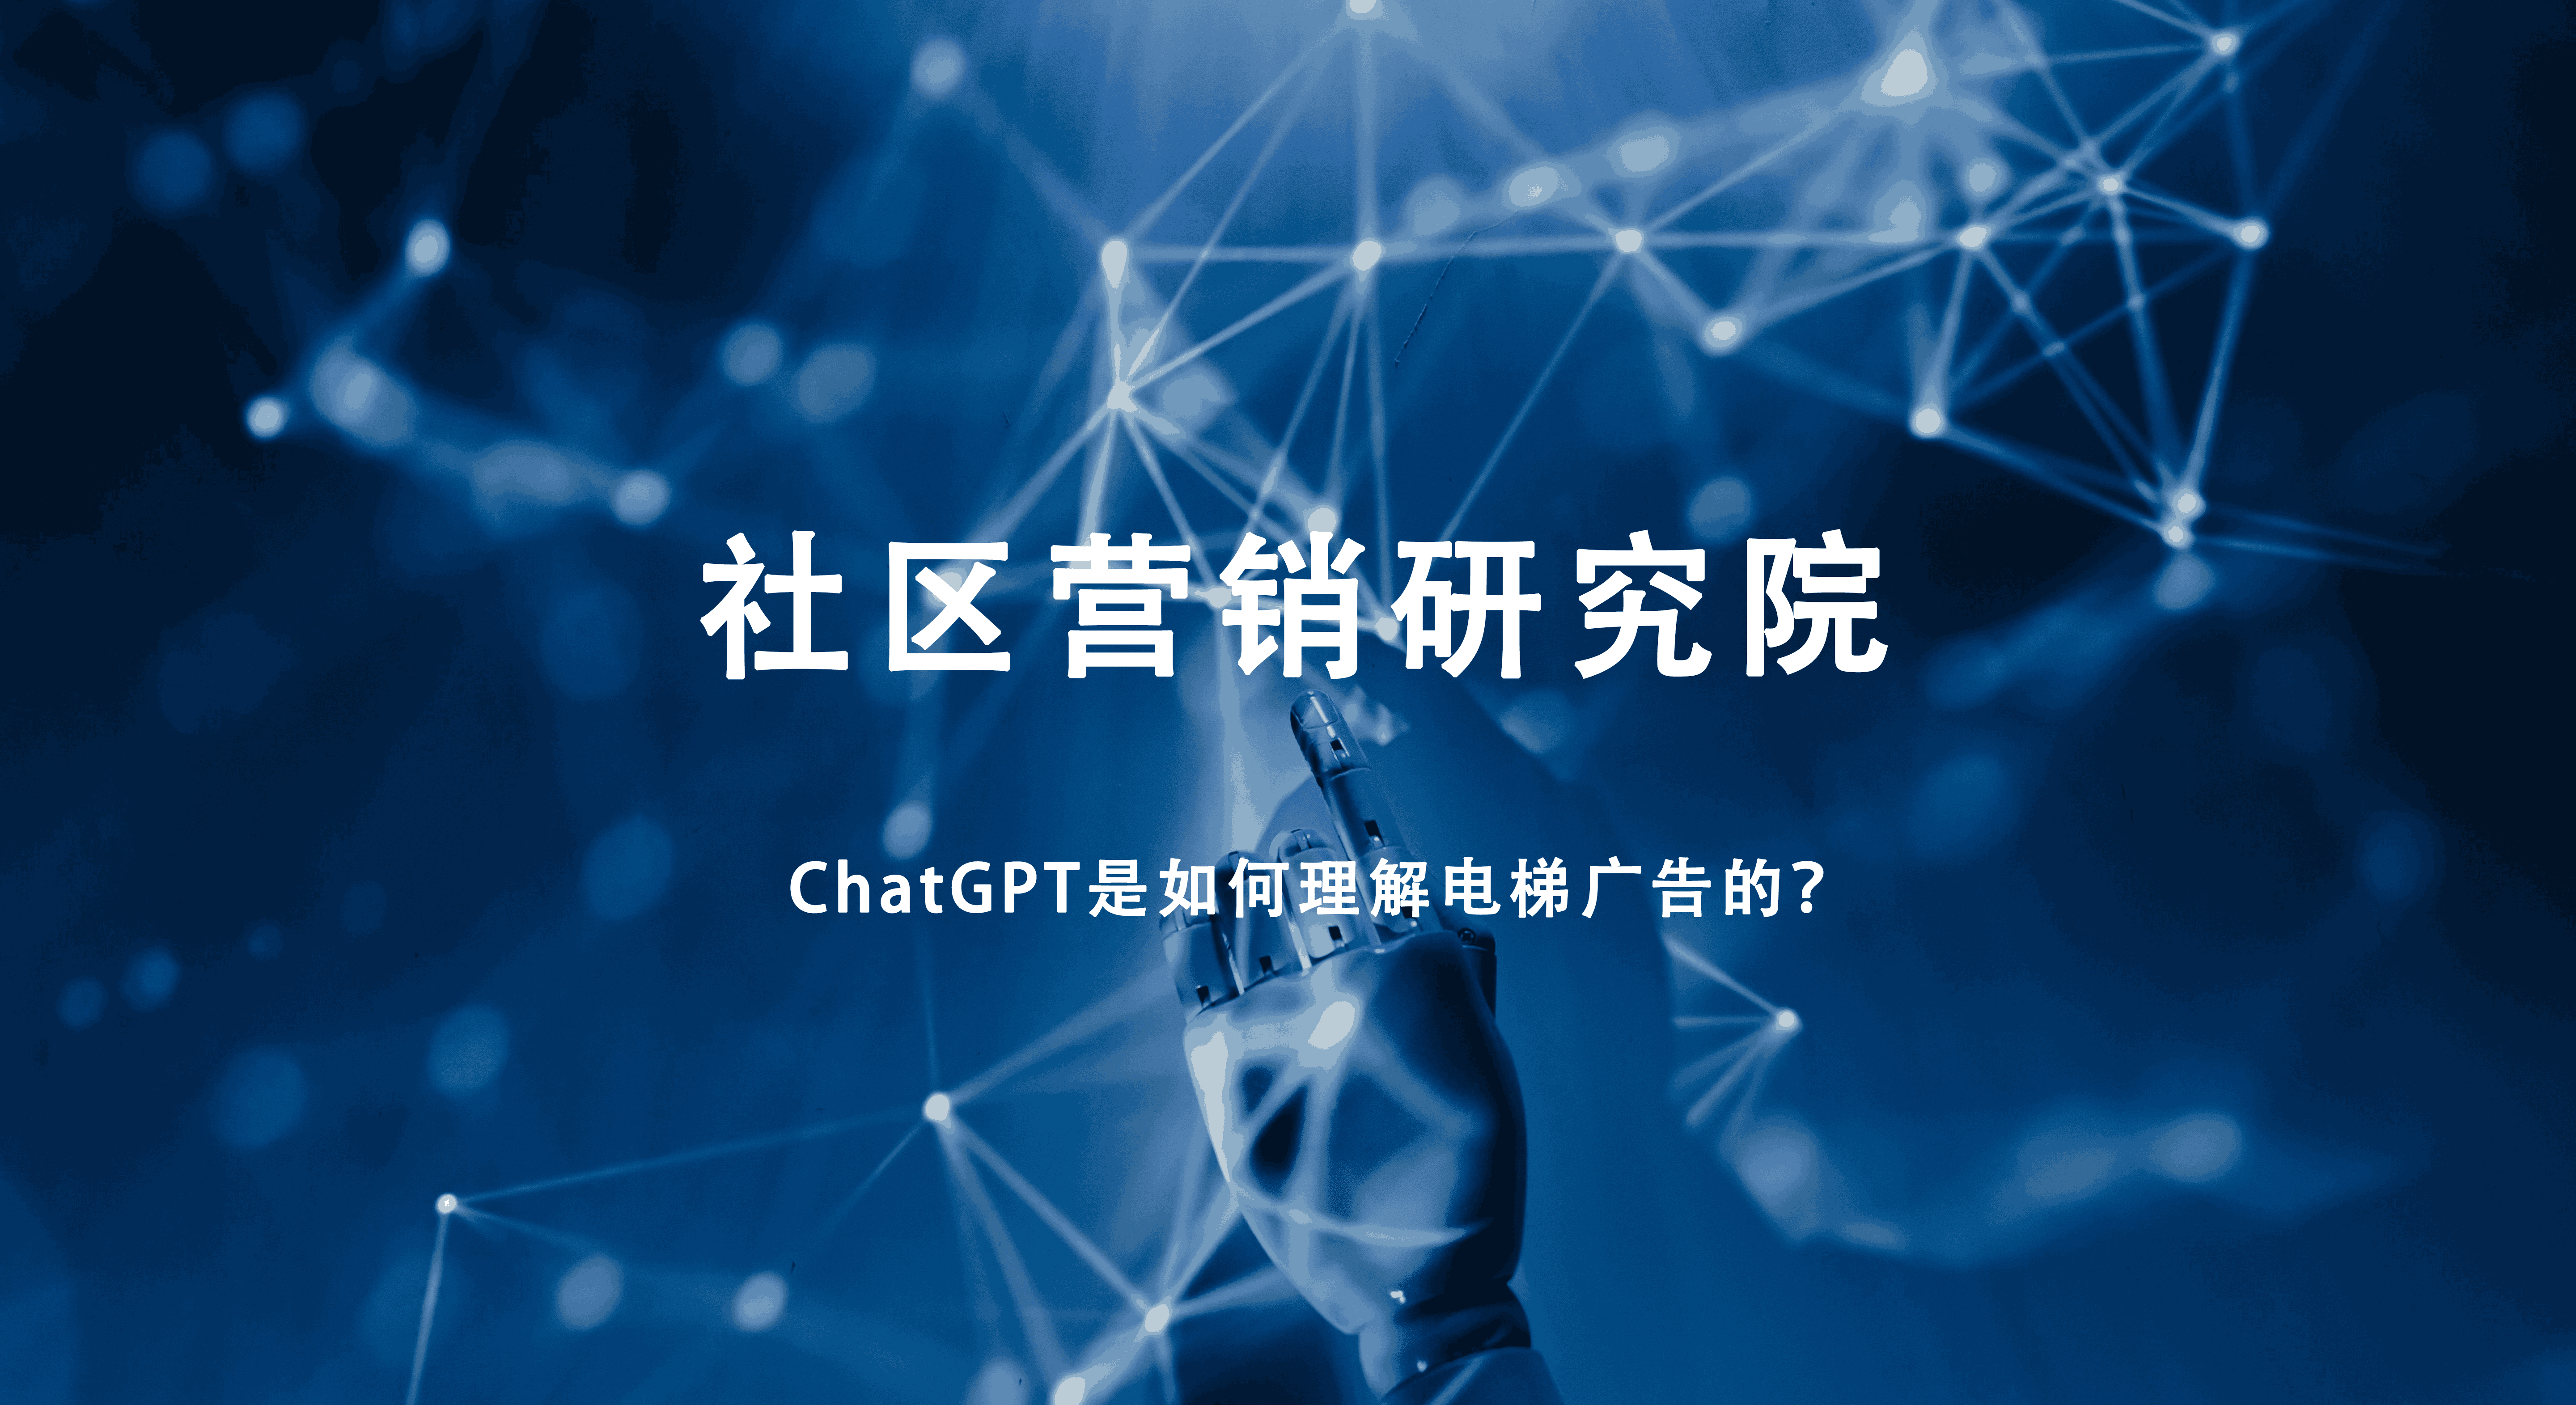 ChatGPT是如何理解电梯广告的？